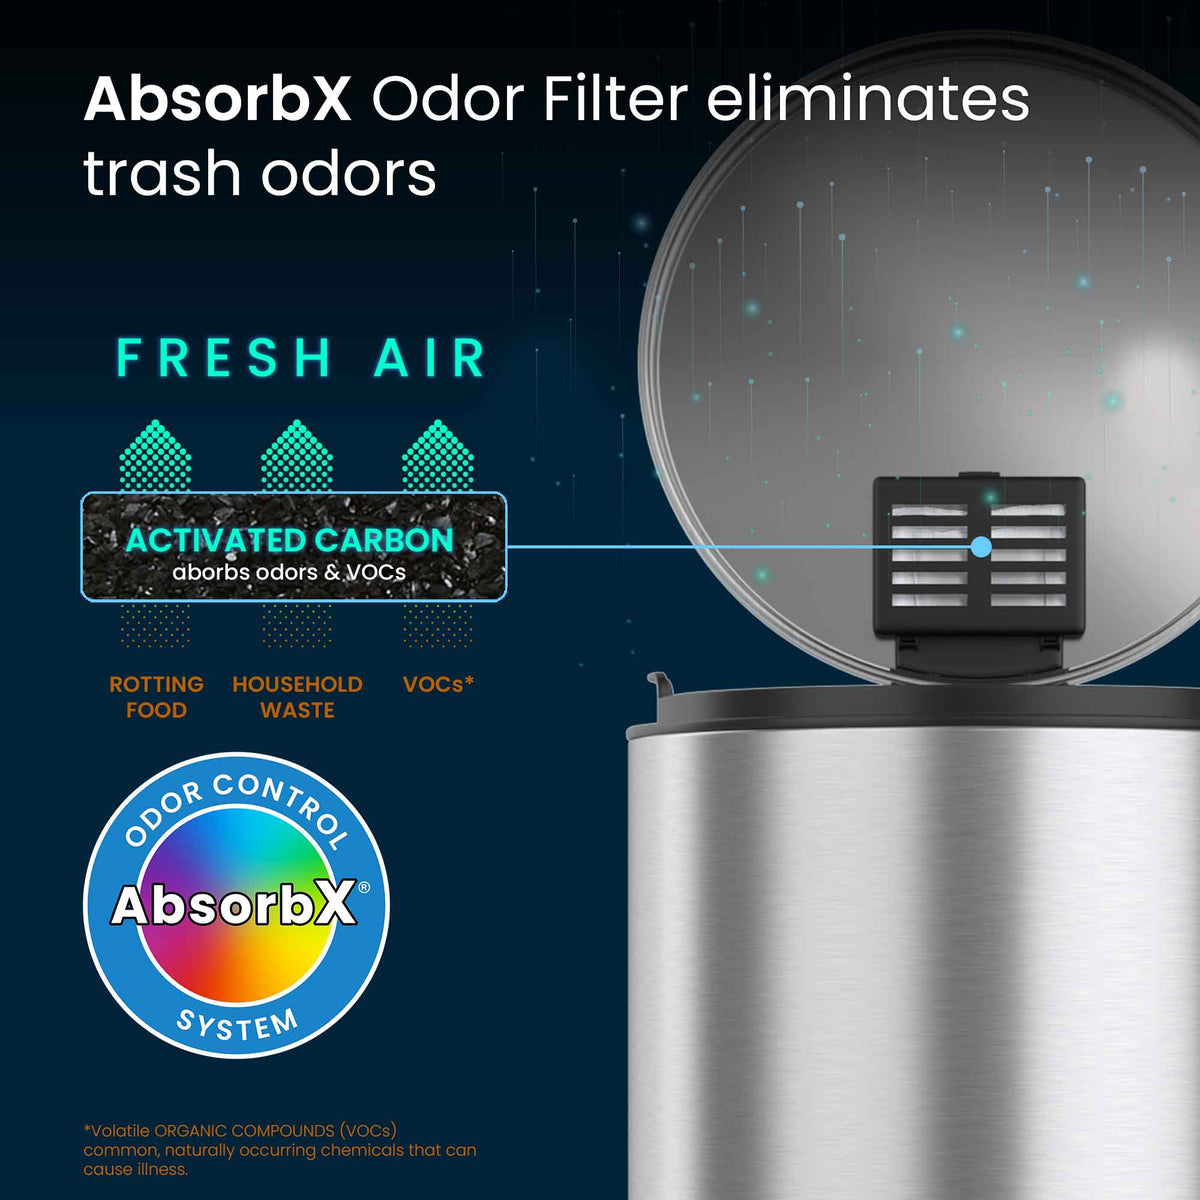 3.2 Gallon / 12 Liter SoftStep Round Step Pedal Trash Can AbsorbX Odor Filter eliminates trash odors